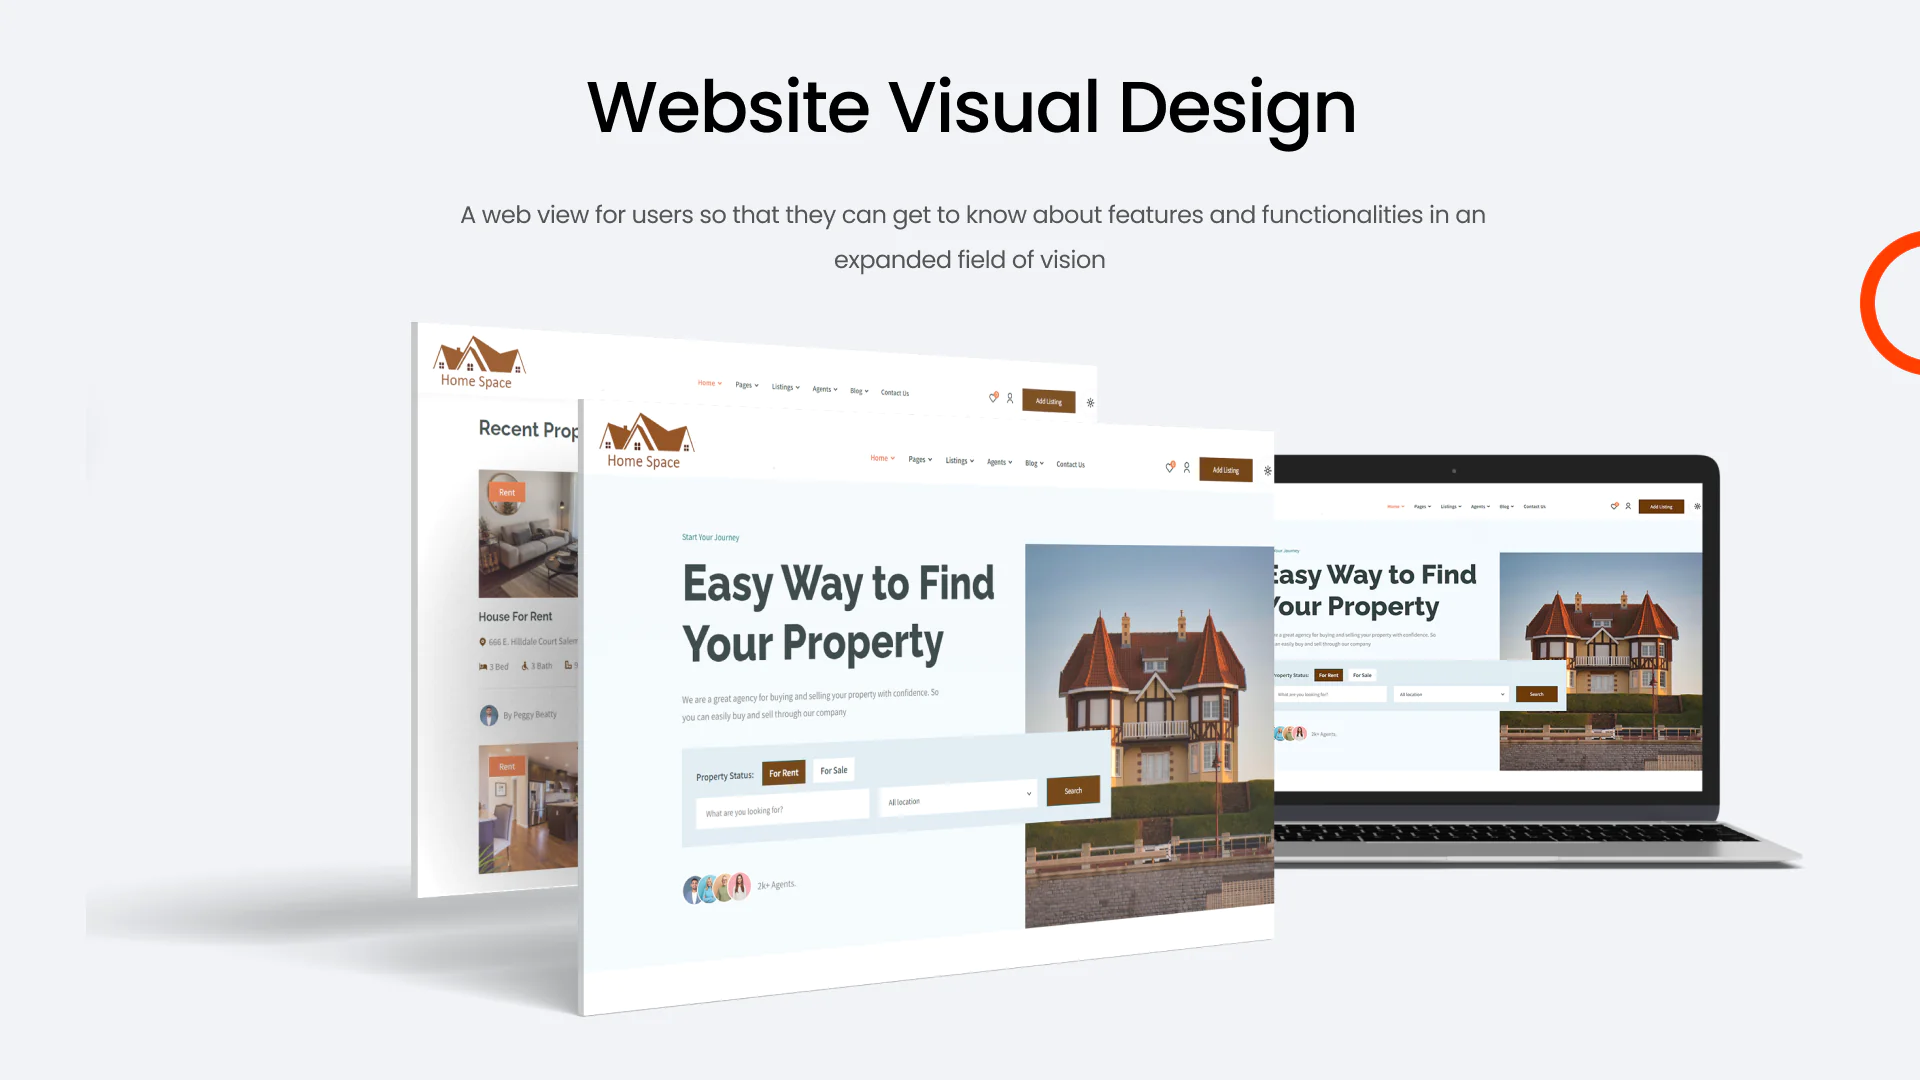 Home space website design